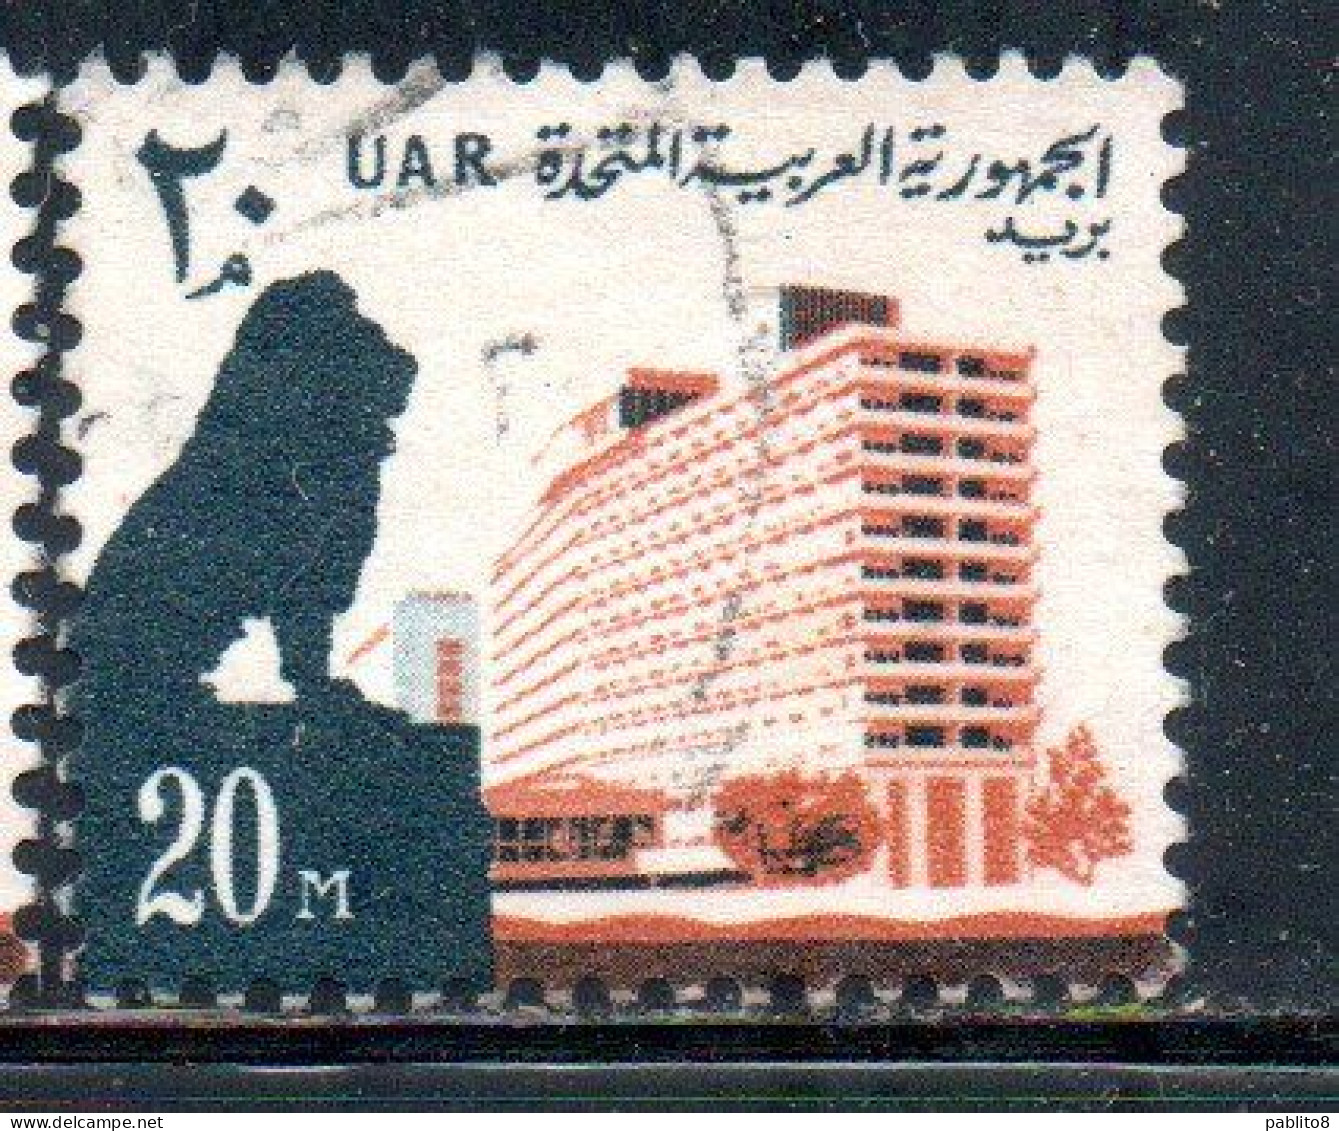 UAR EGYPT EGITTO 1964 1967 LION AND NILE HILTON HOTEL 20m USED USATO OBLITERE' - Gebraucht